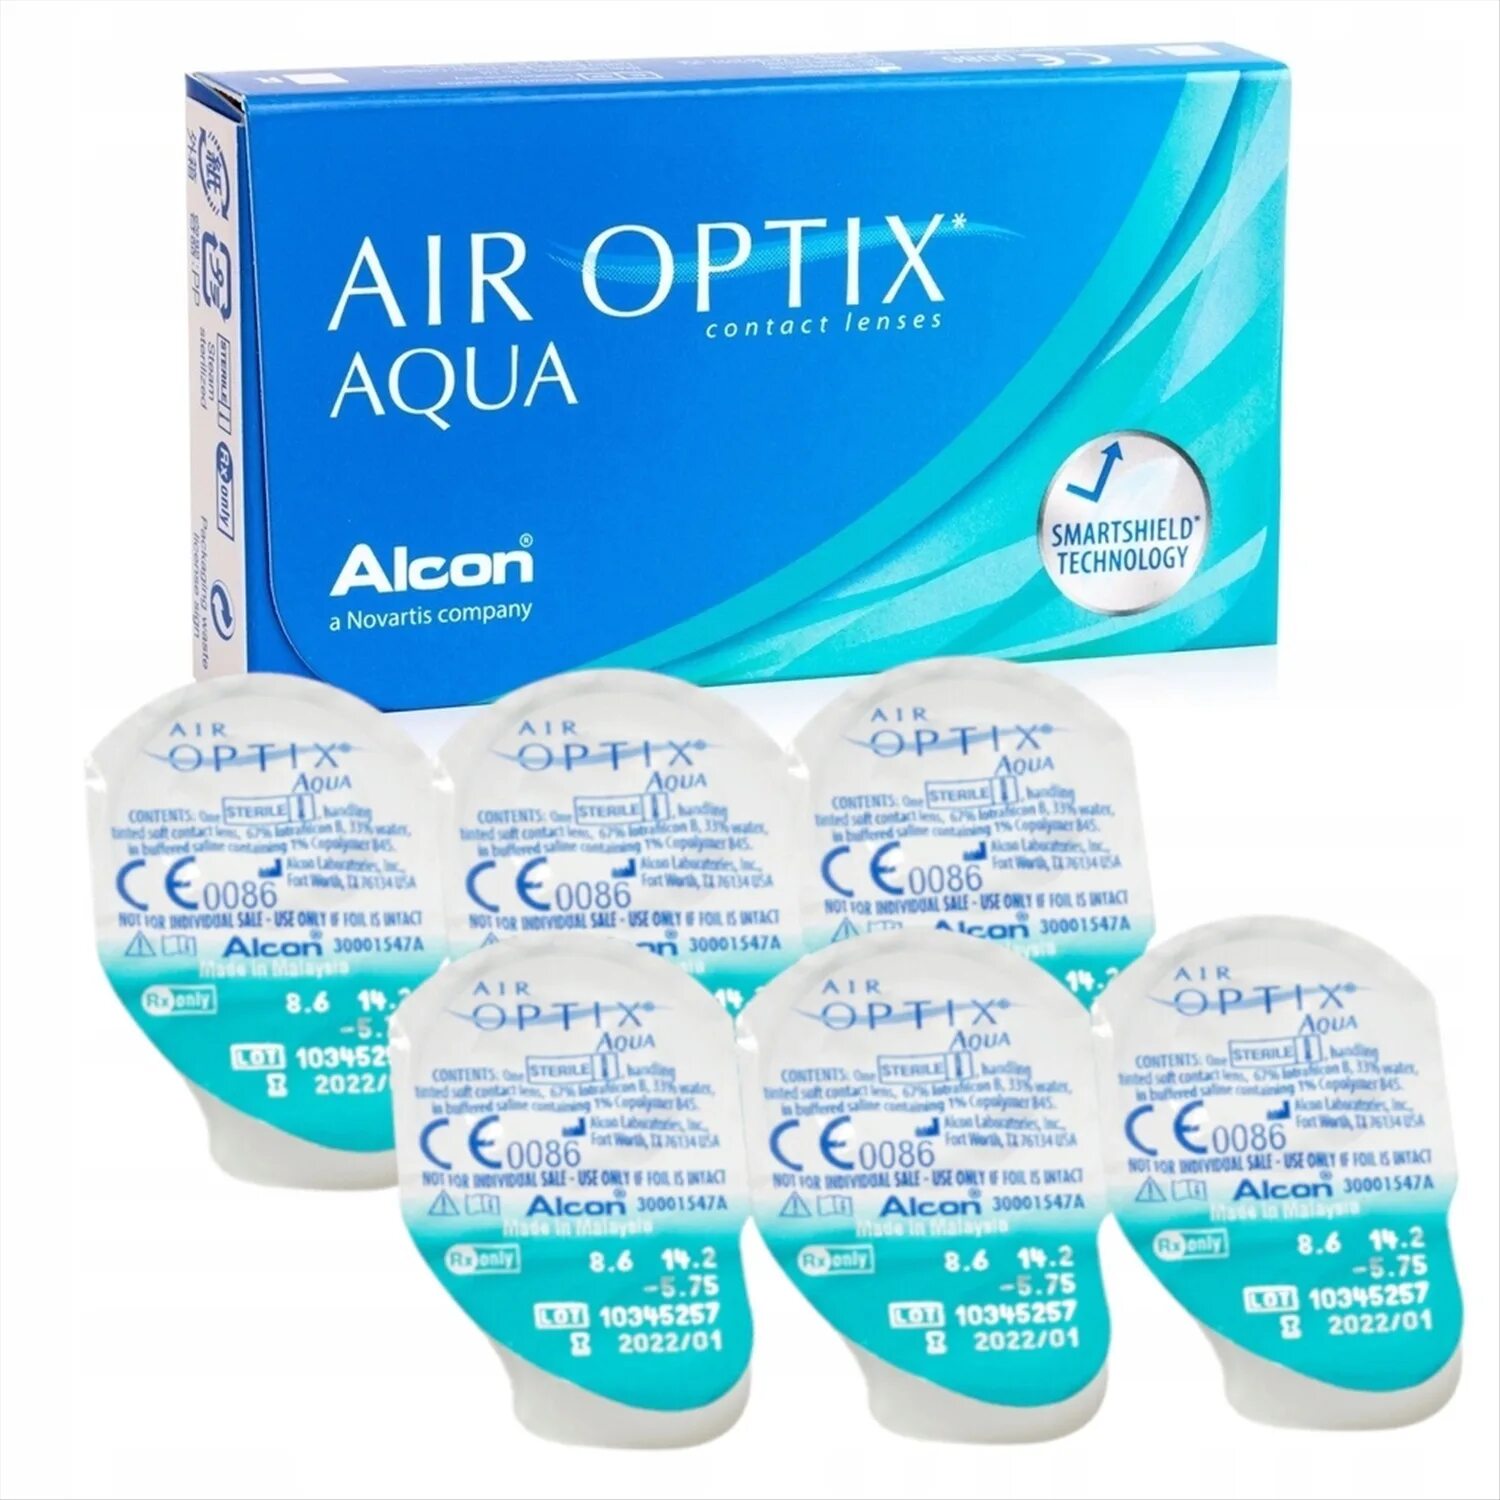 Alcon. Air Optix 6 линз. Air Optix Aqua (3 линзы). Линзы Alcon Air Optix Aqua. Alcon контактные линзы "Air Optix Aqua", 6 шт., -2.25 / 8.6/ ежемесячные.